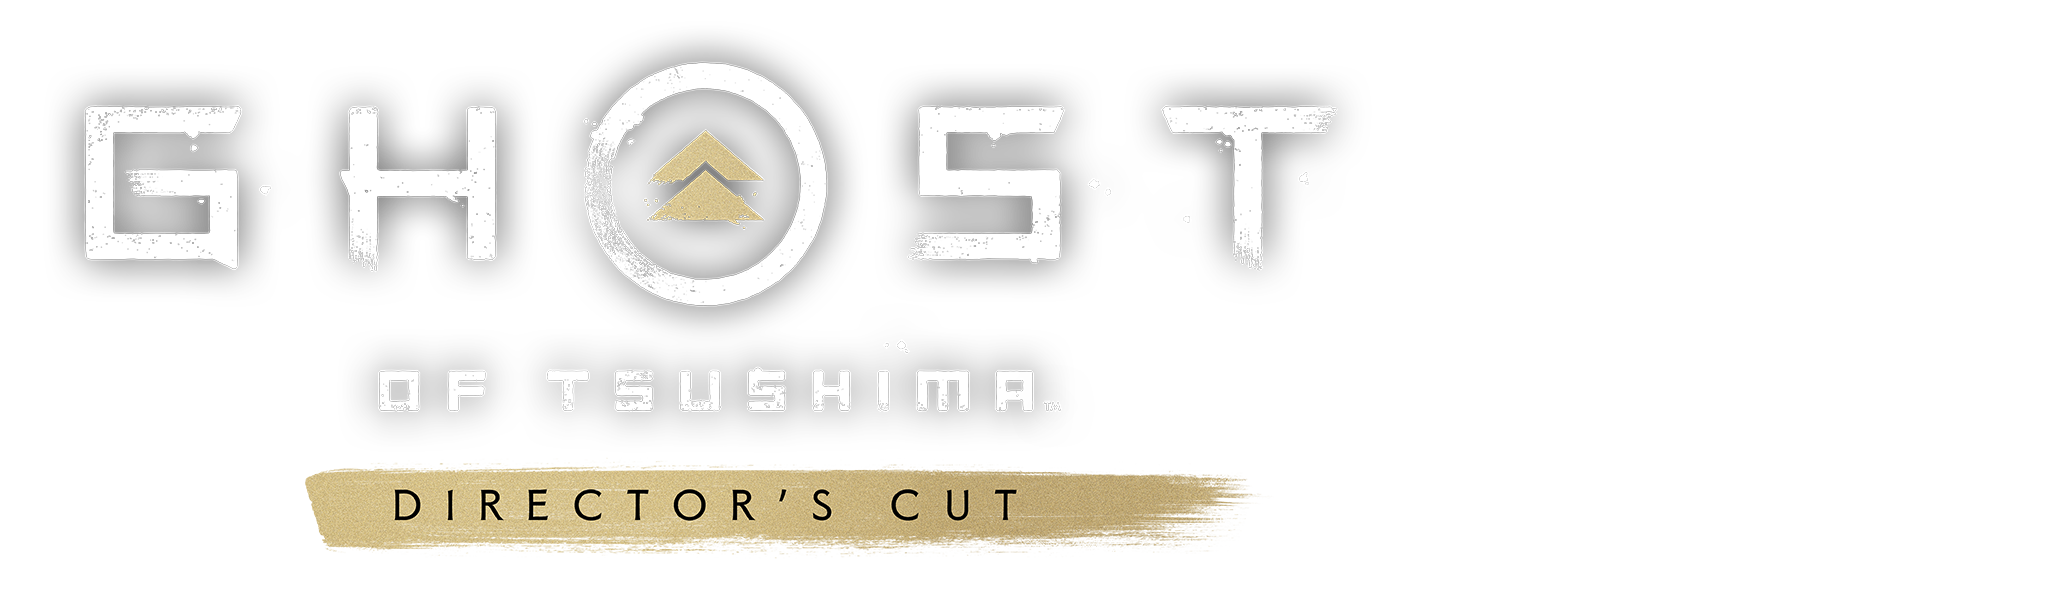 Ghost of Tsushima Director's Cut é anunciado com data de